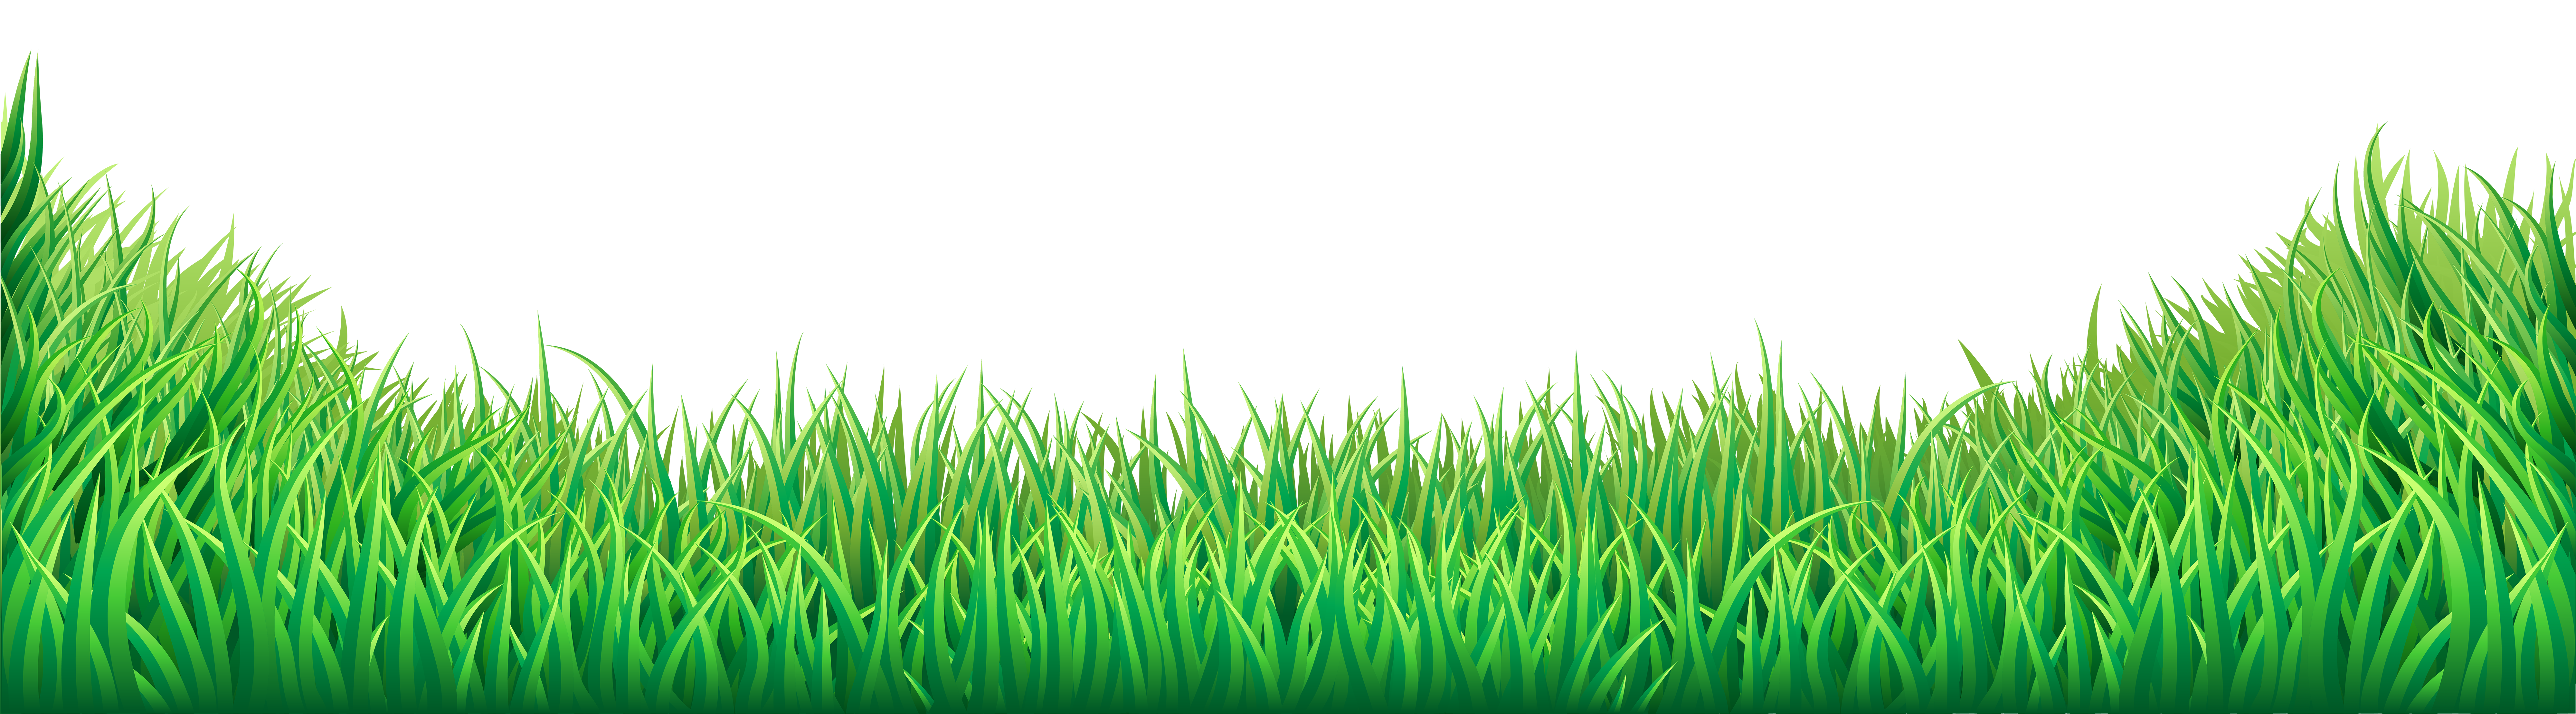 Grass PNG Transparent Grass.PNG Images..